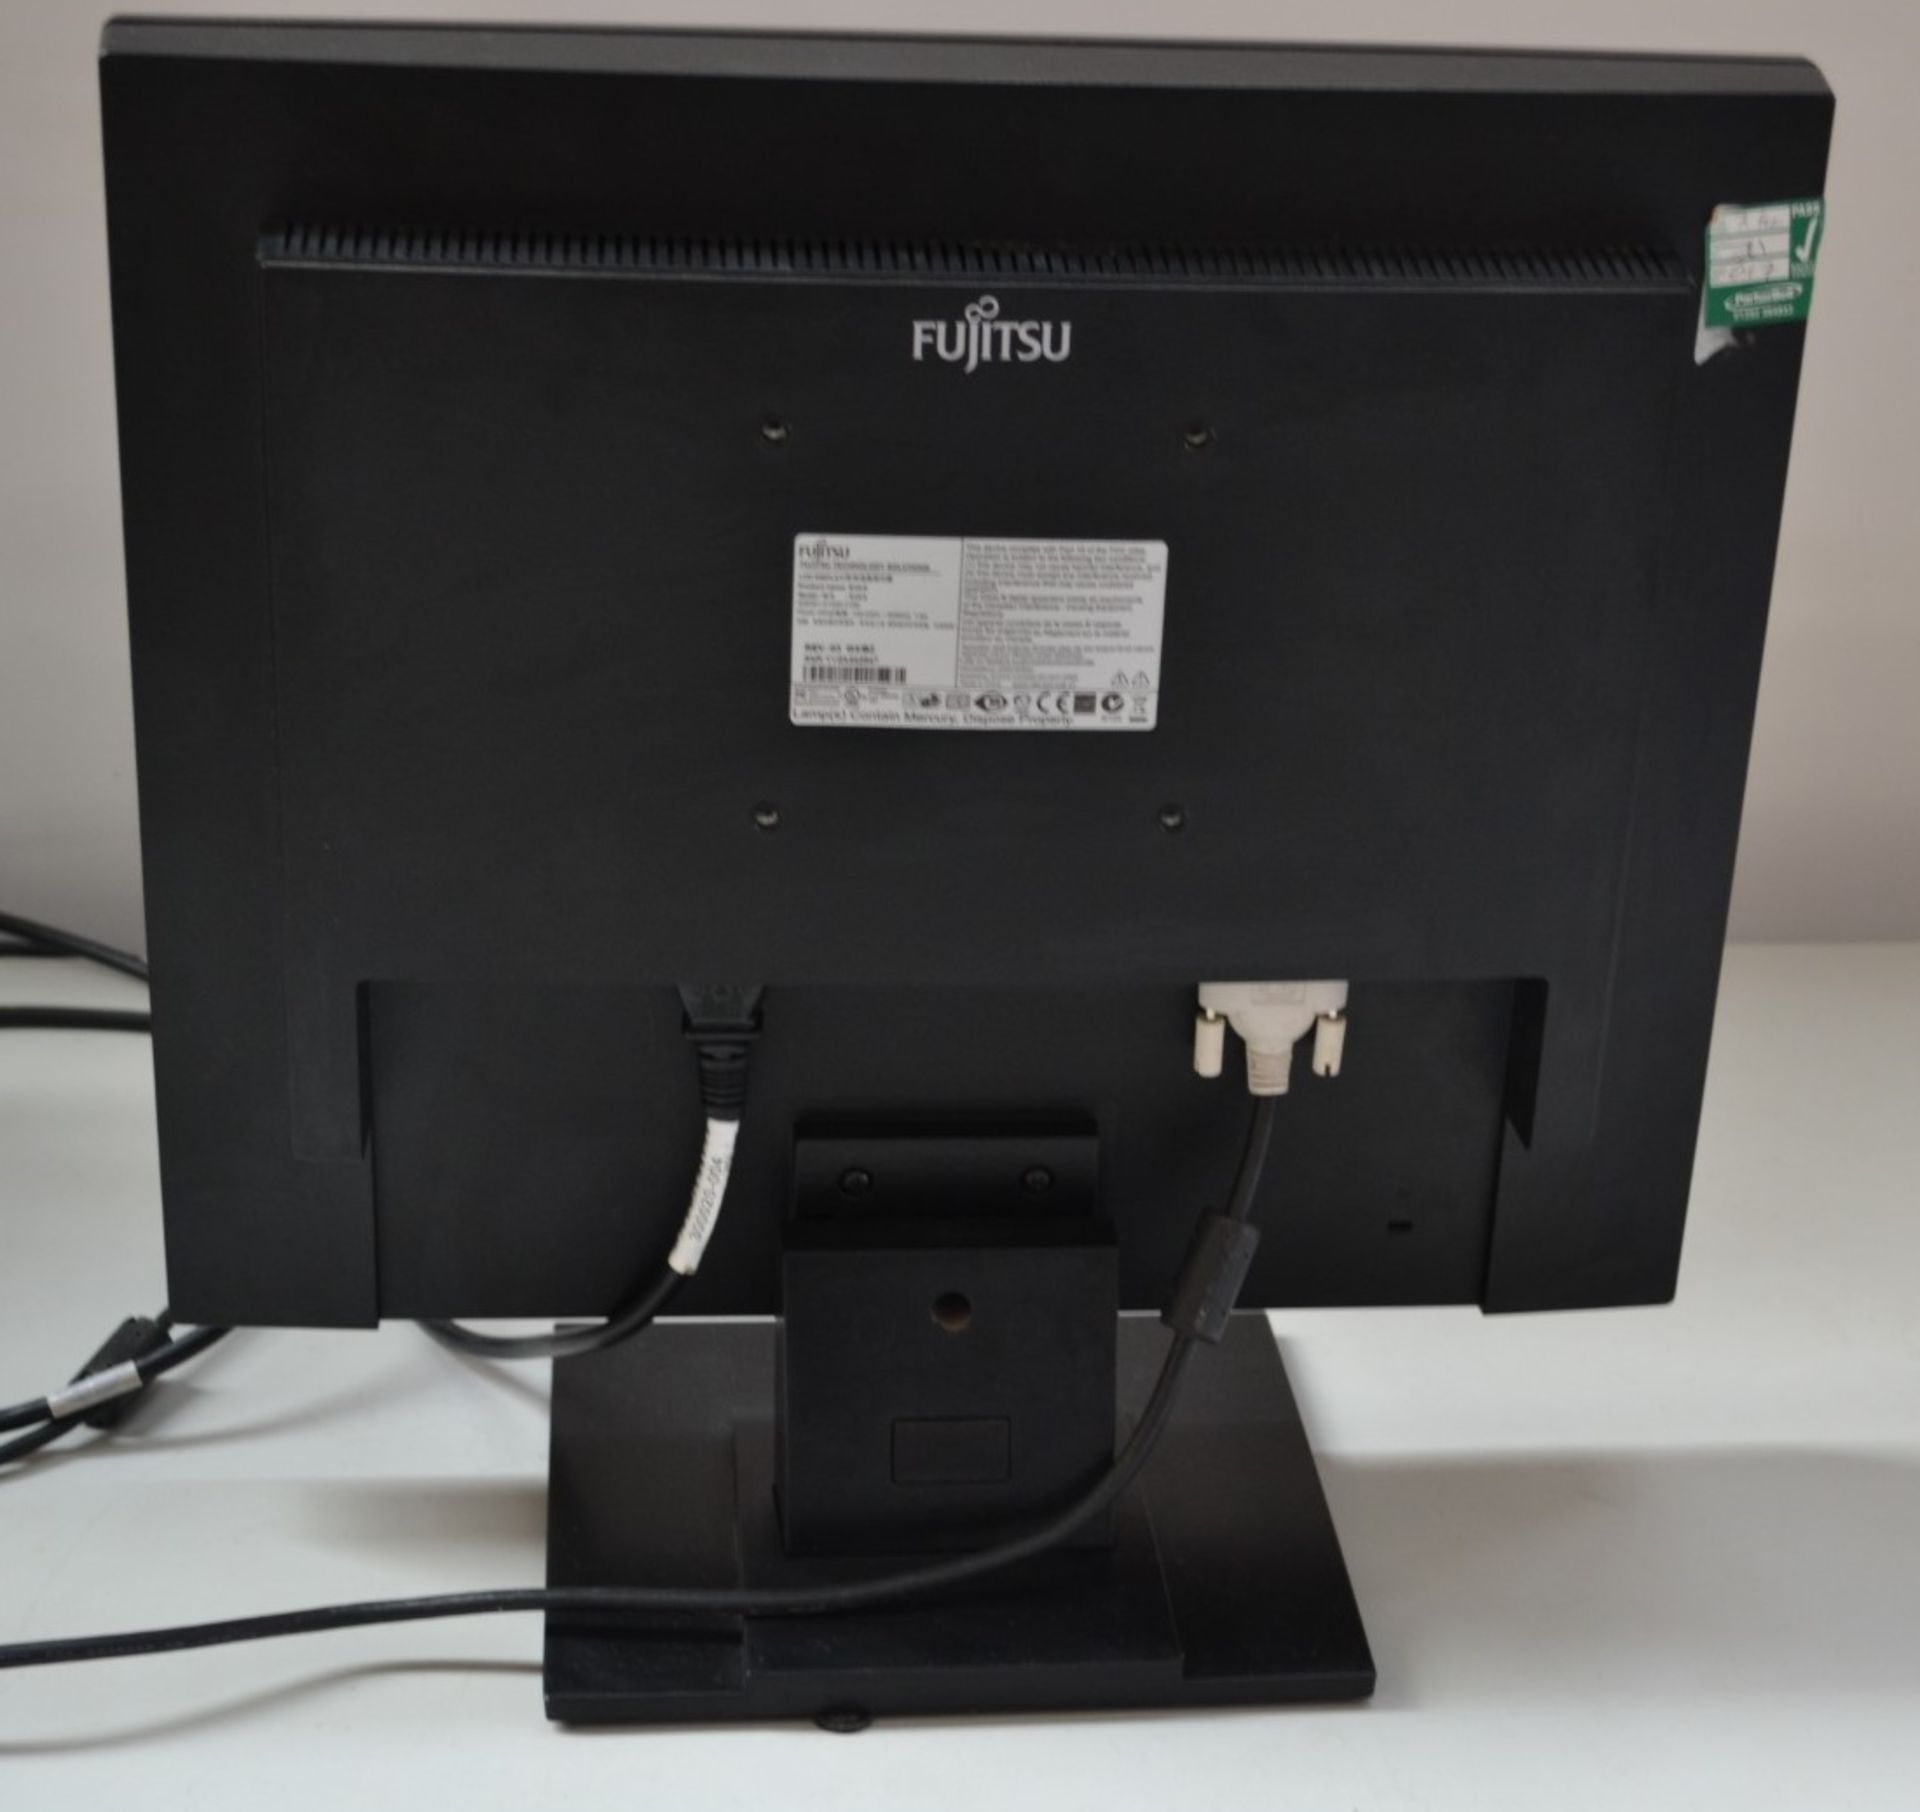 1 x Fujitsu E19-5 19-inch TFT LCD PC Monitor - Ref J2261 - Image 2 of 3